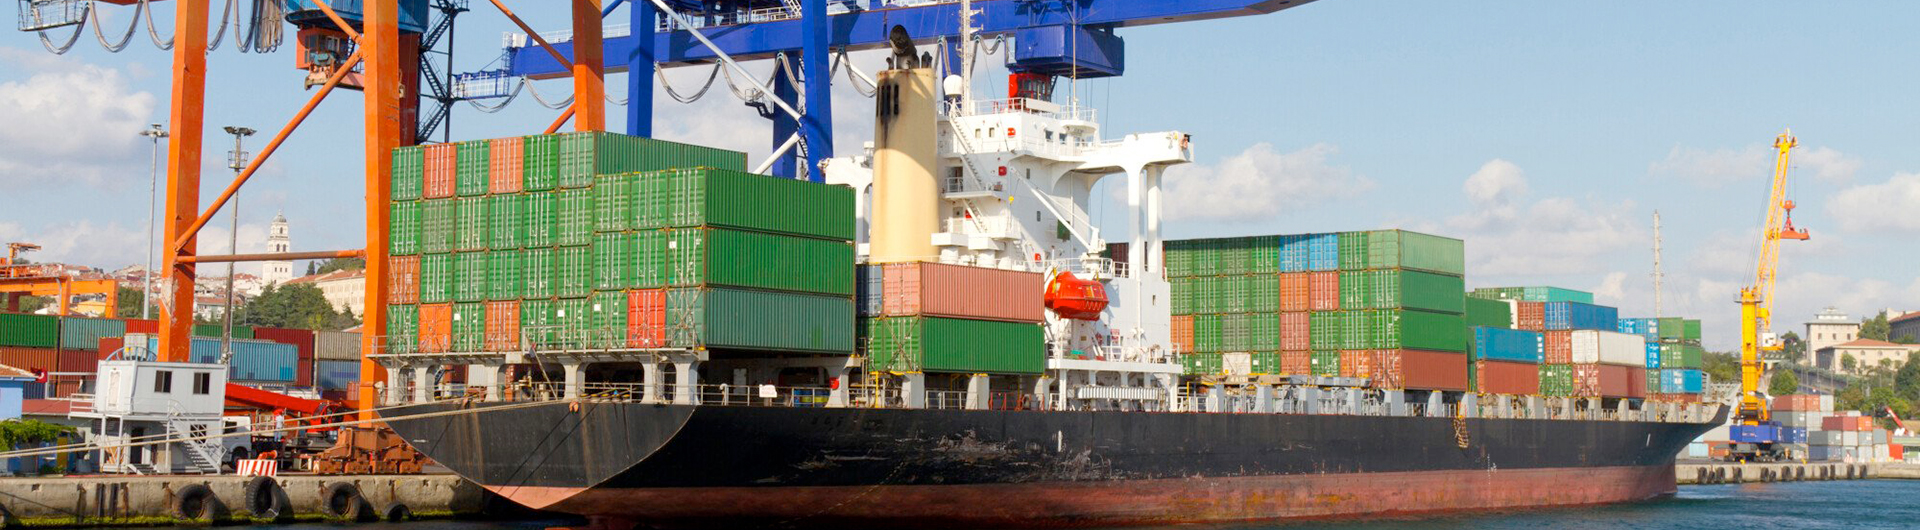 Port of Charleston - Norfolk Asset Based Trucking, Warehousing, and ...